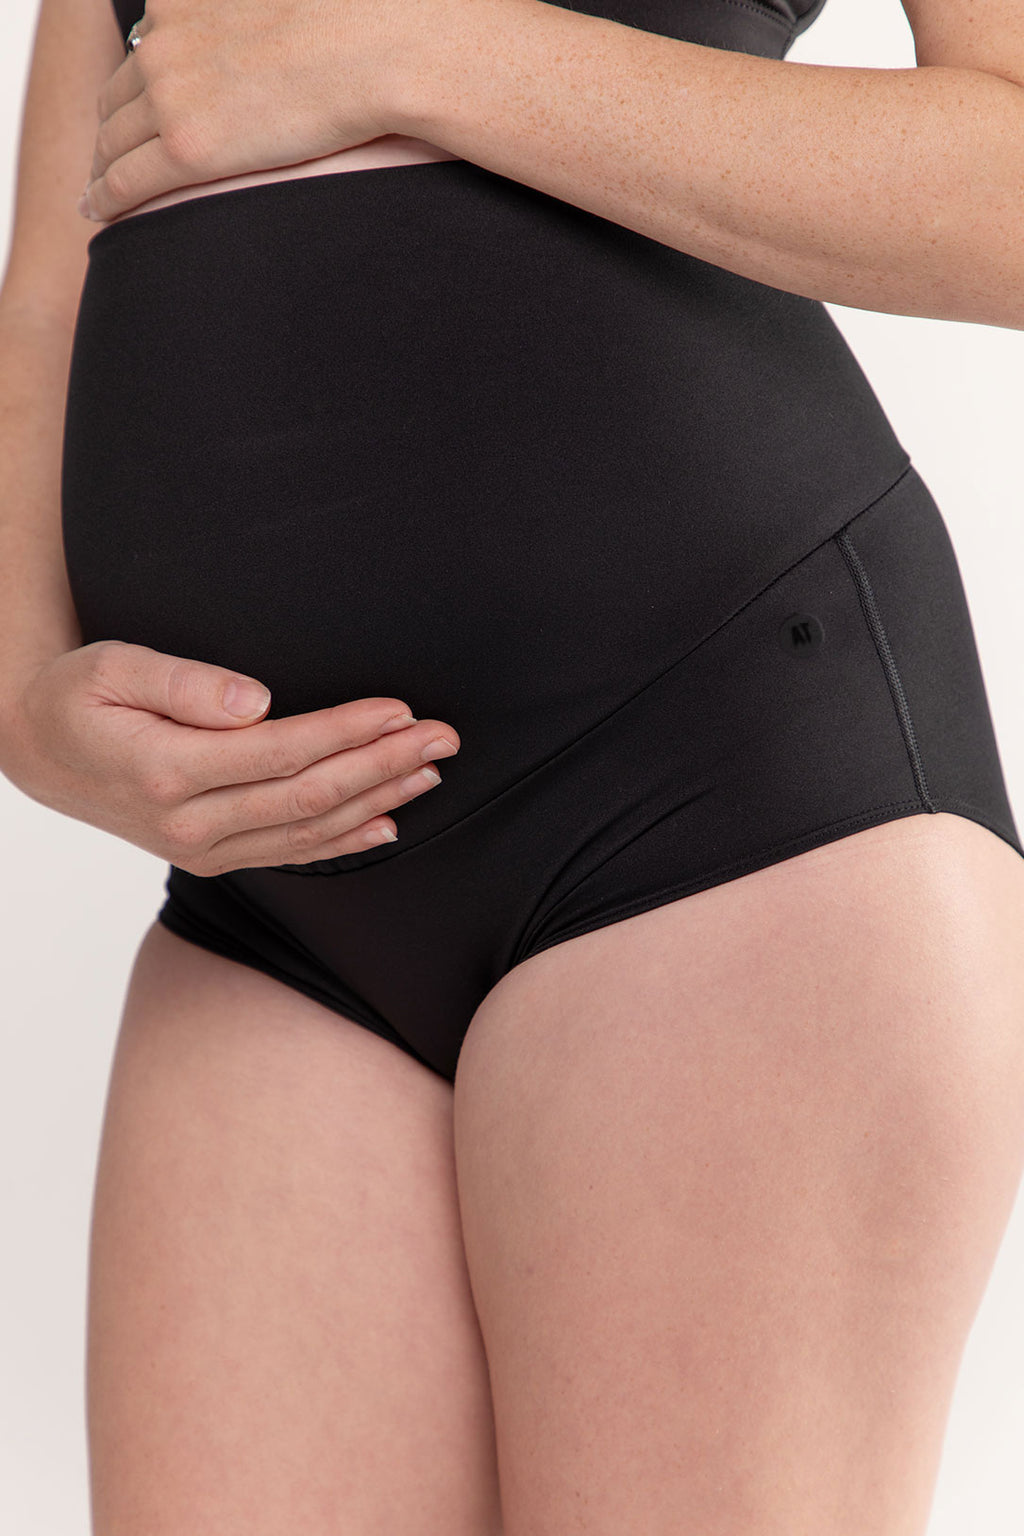 maternity-brief-underwear-black-small-side
